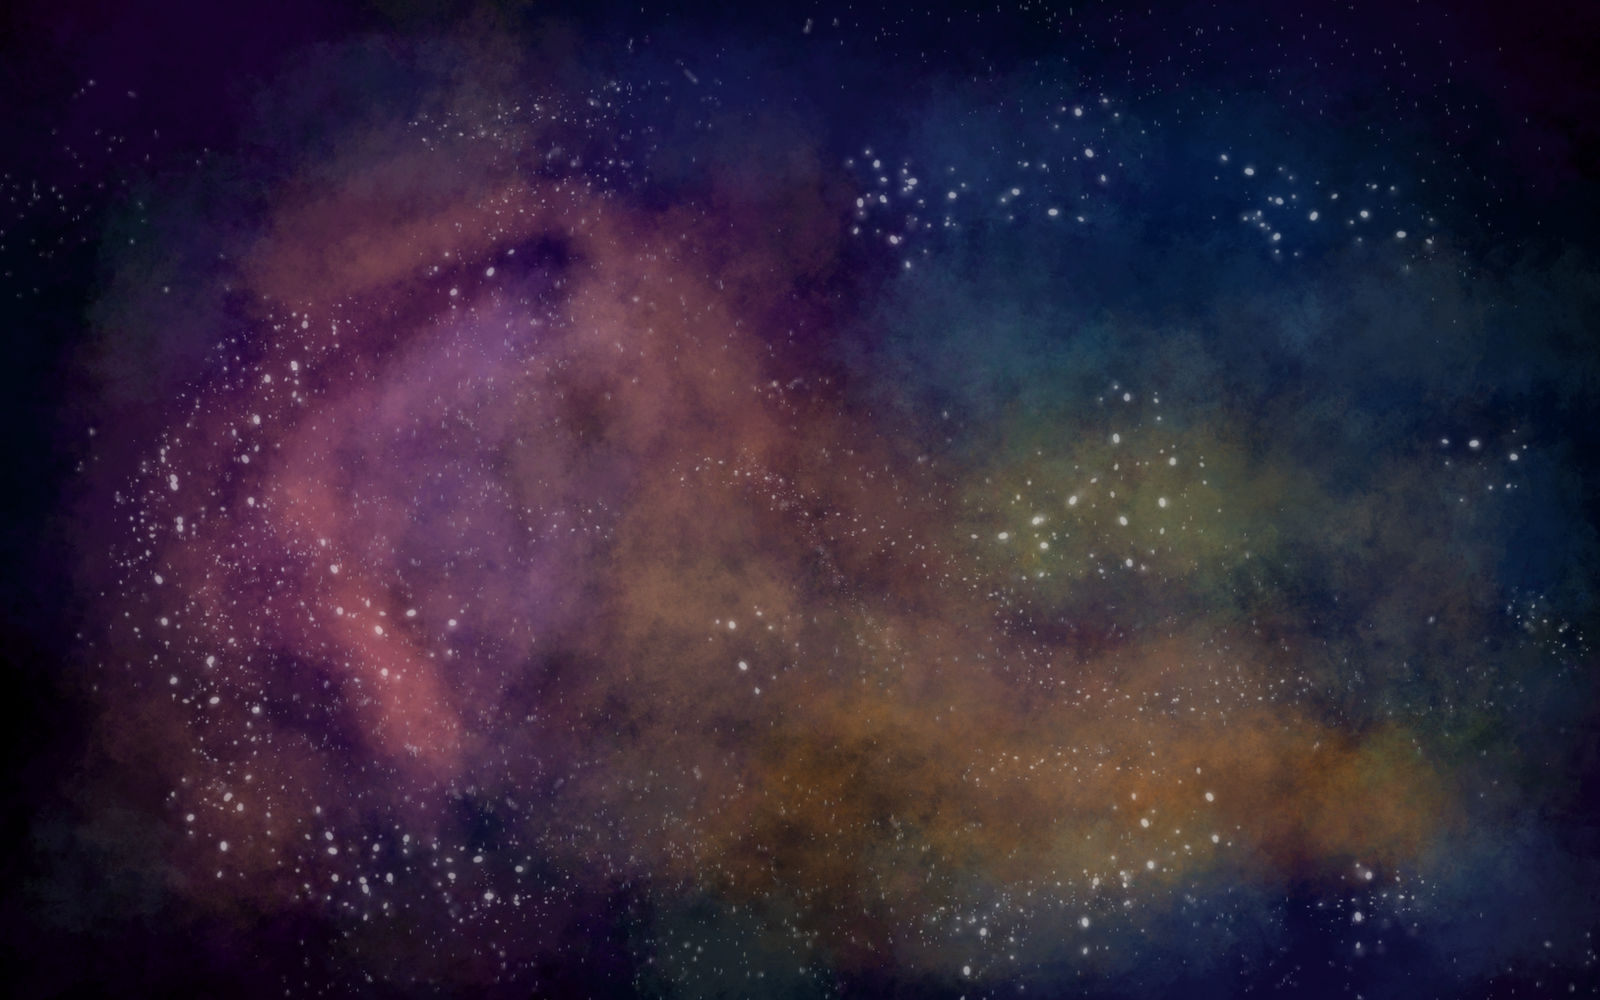 Galaxy wallpaper - Galaxie fond d'ecran by Eloranne on DeviantArt